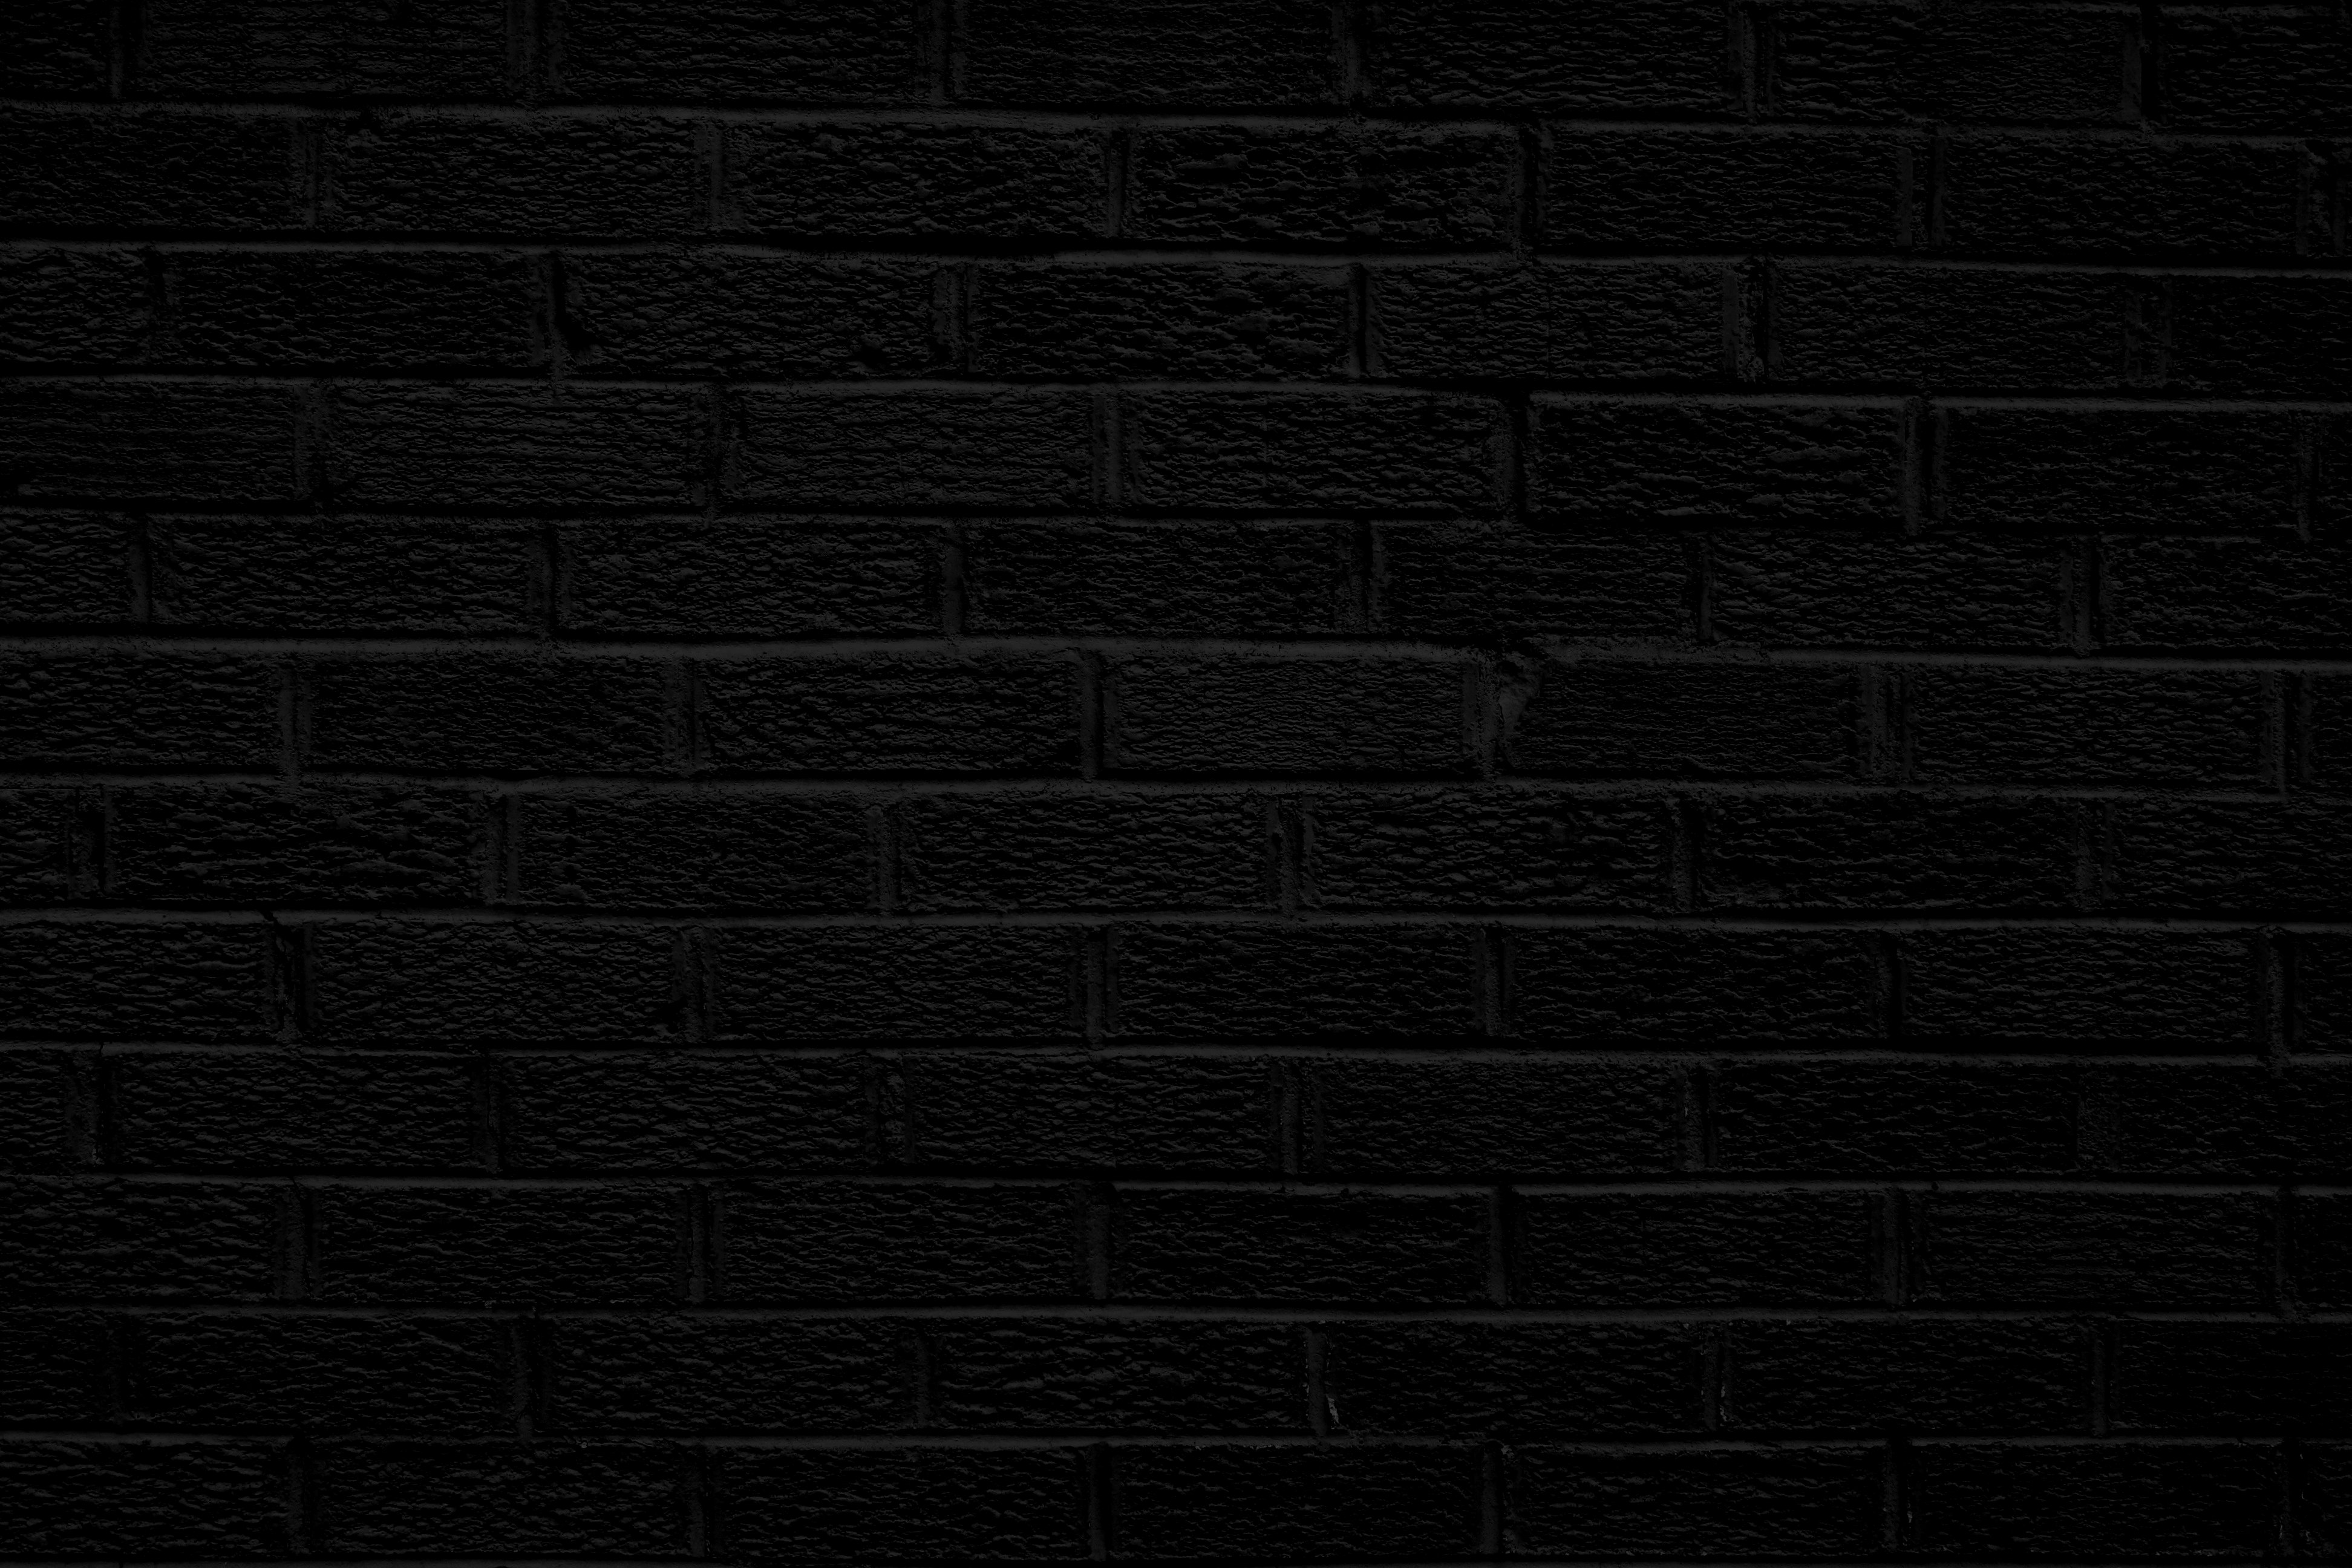 Graffiti Bricks Black Brick Wall Texture Picture Photograph